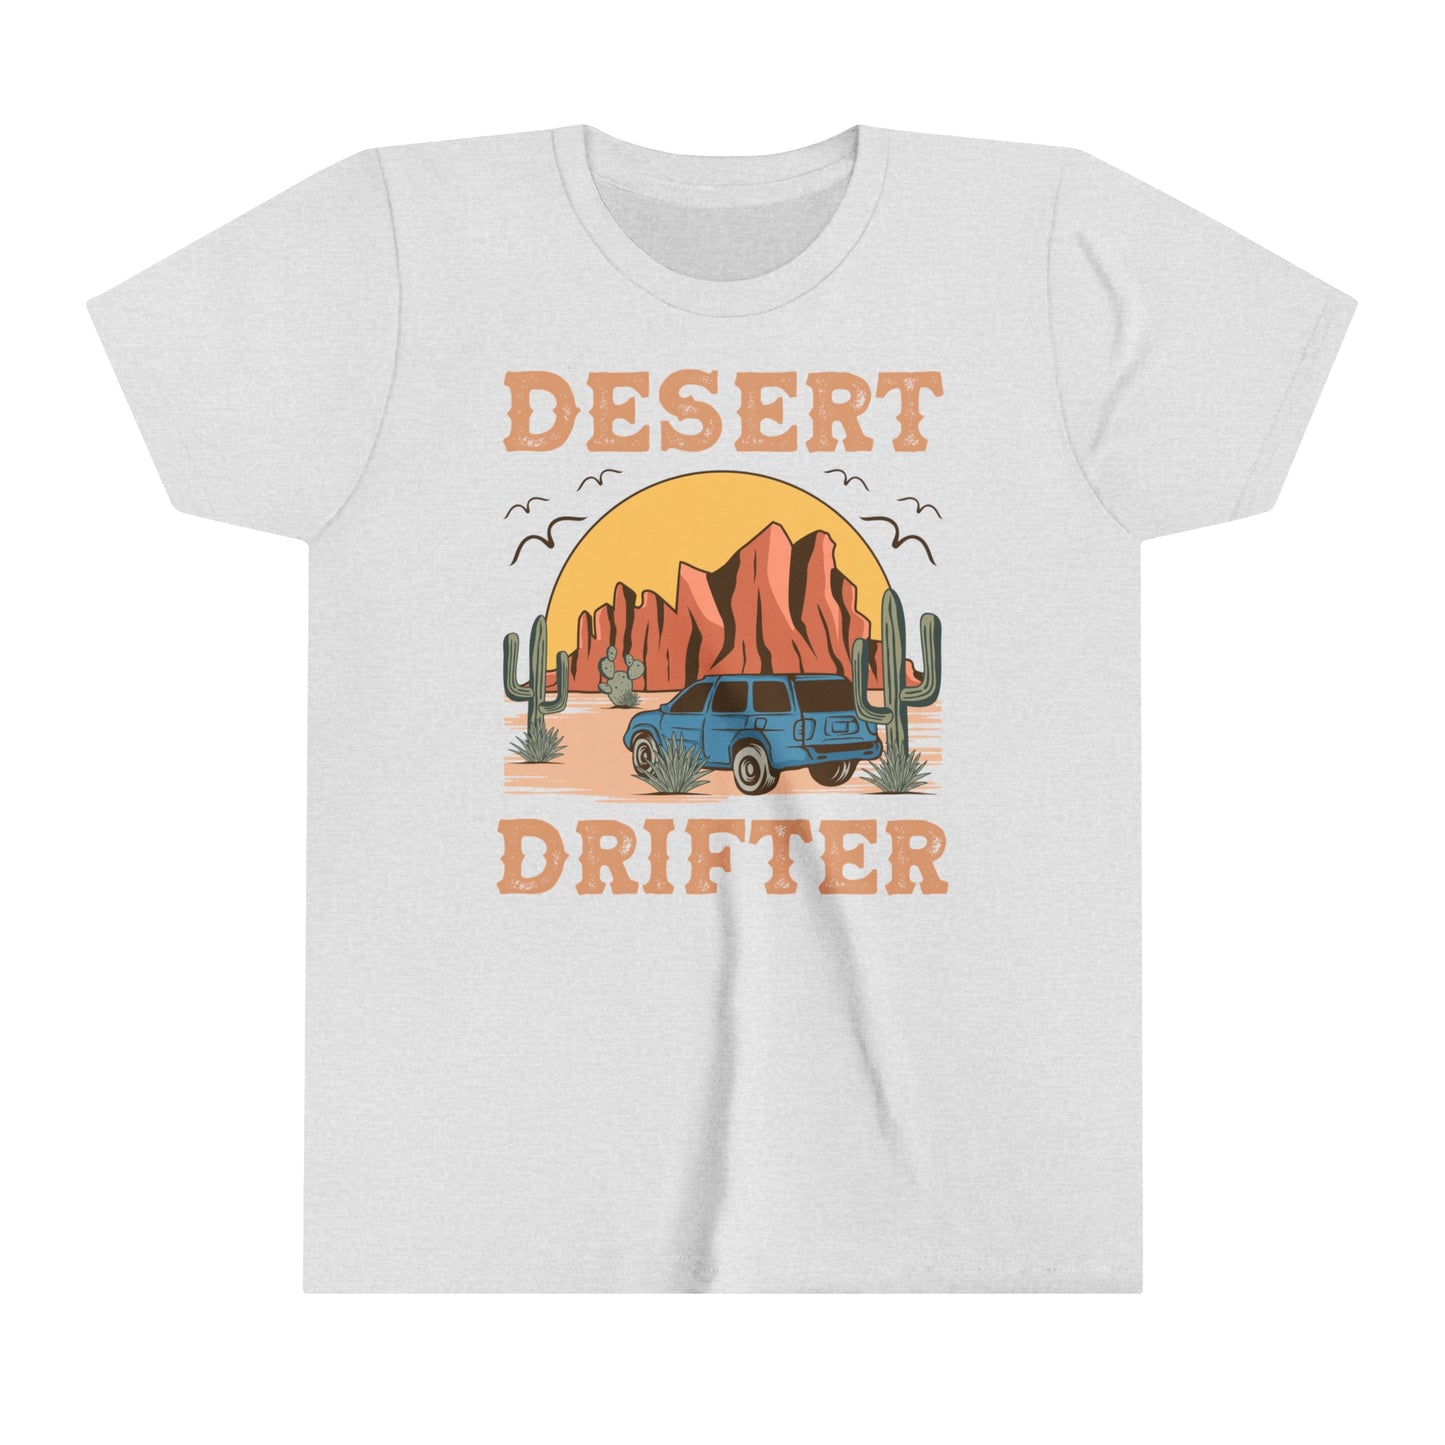 Desert Drifter Youth T-Shirt | Retro Western Kid's Tee